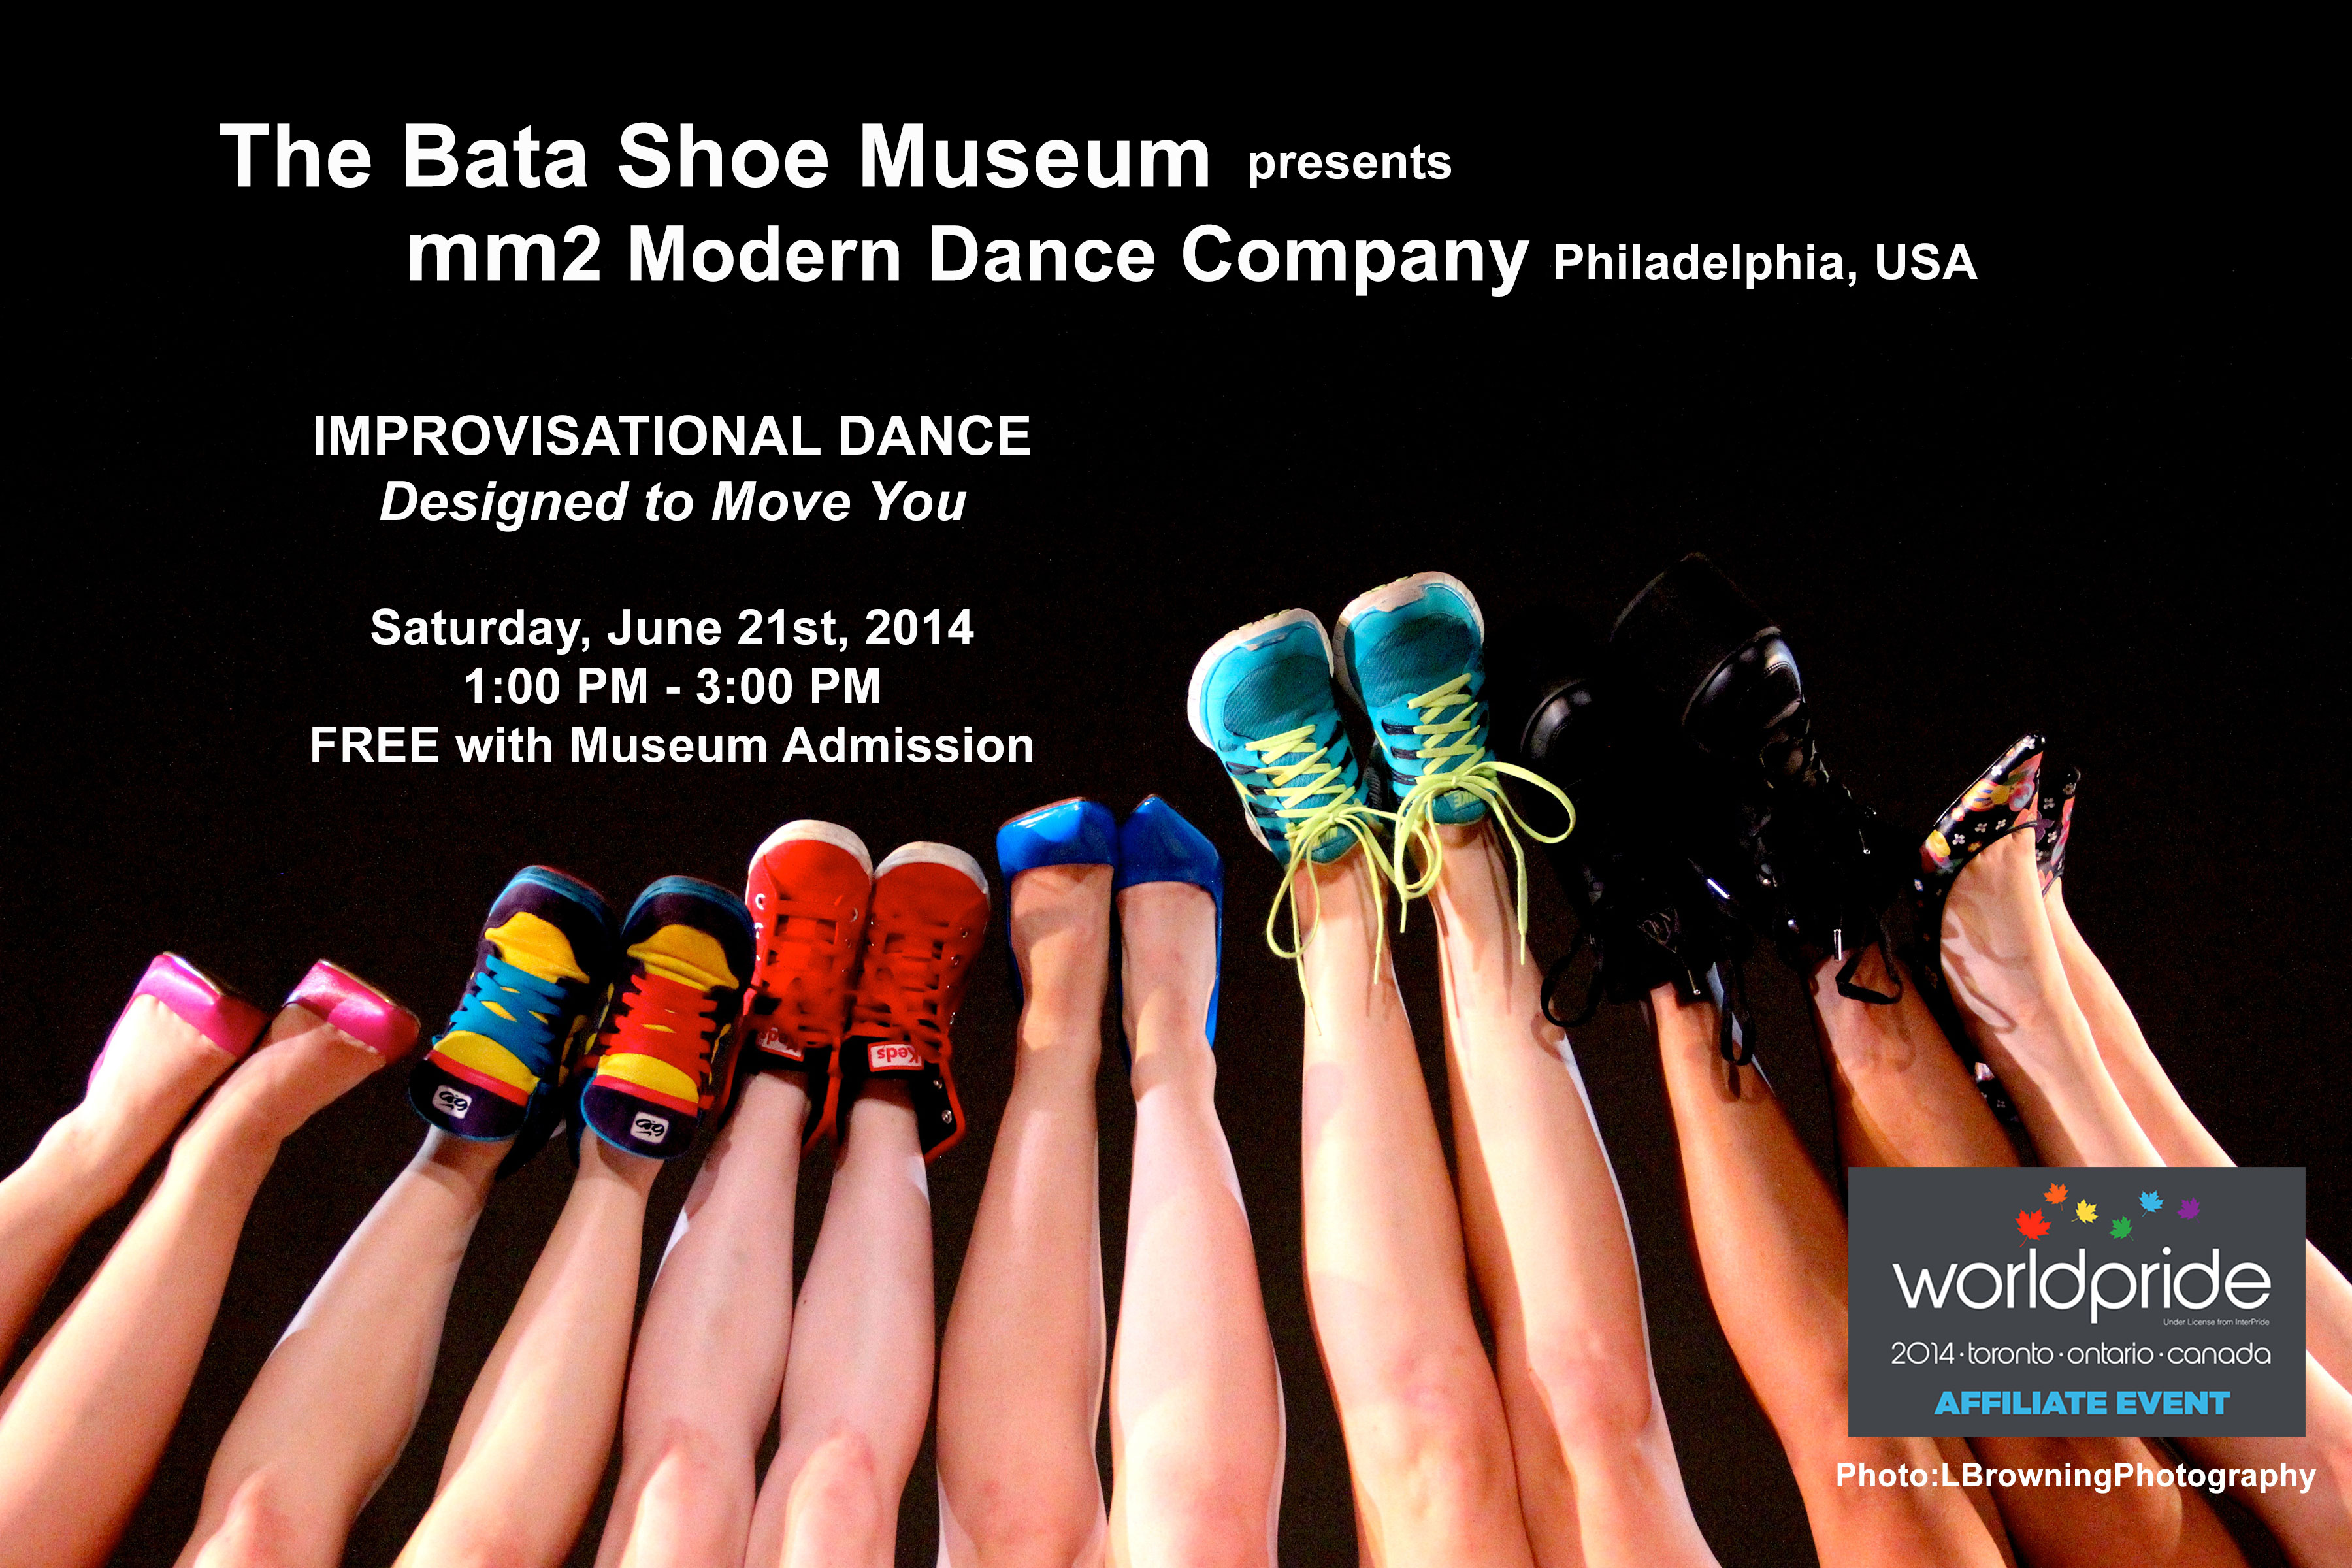 MM2 Modern Dance Footloose at The Bata Shoe Museum